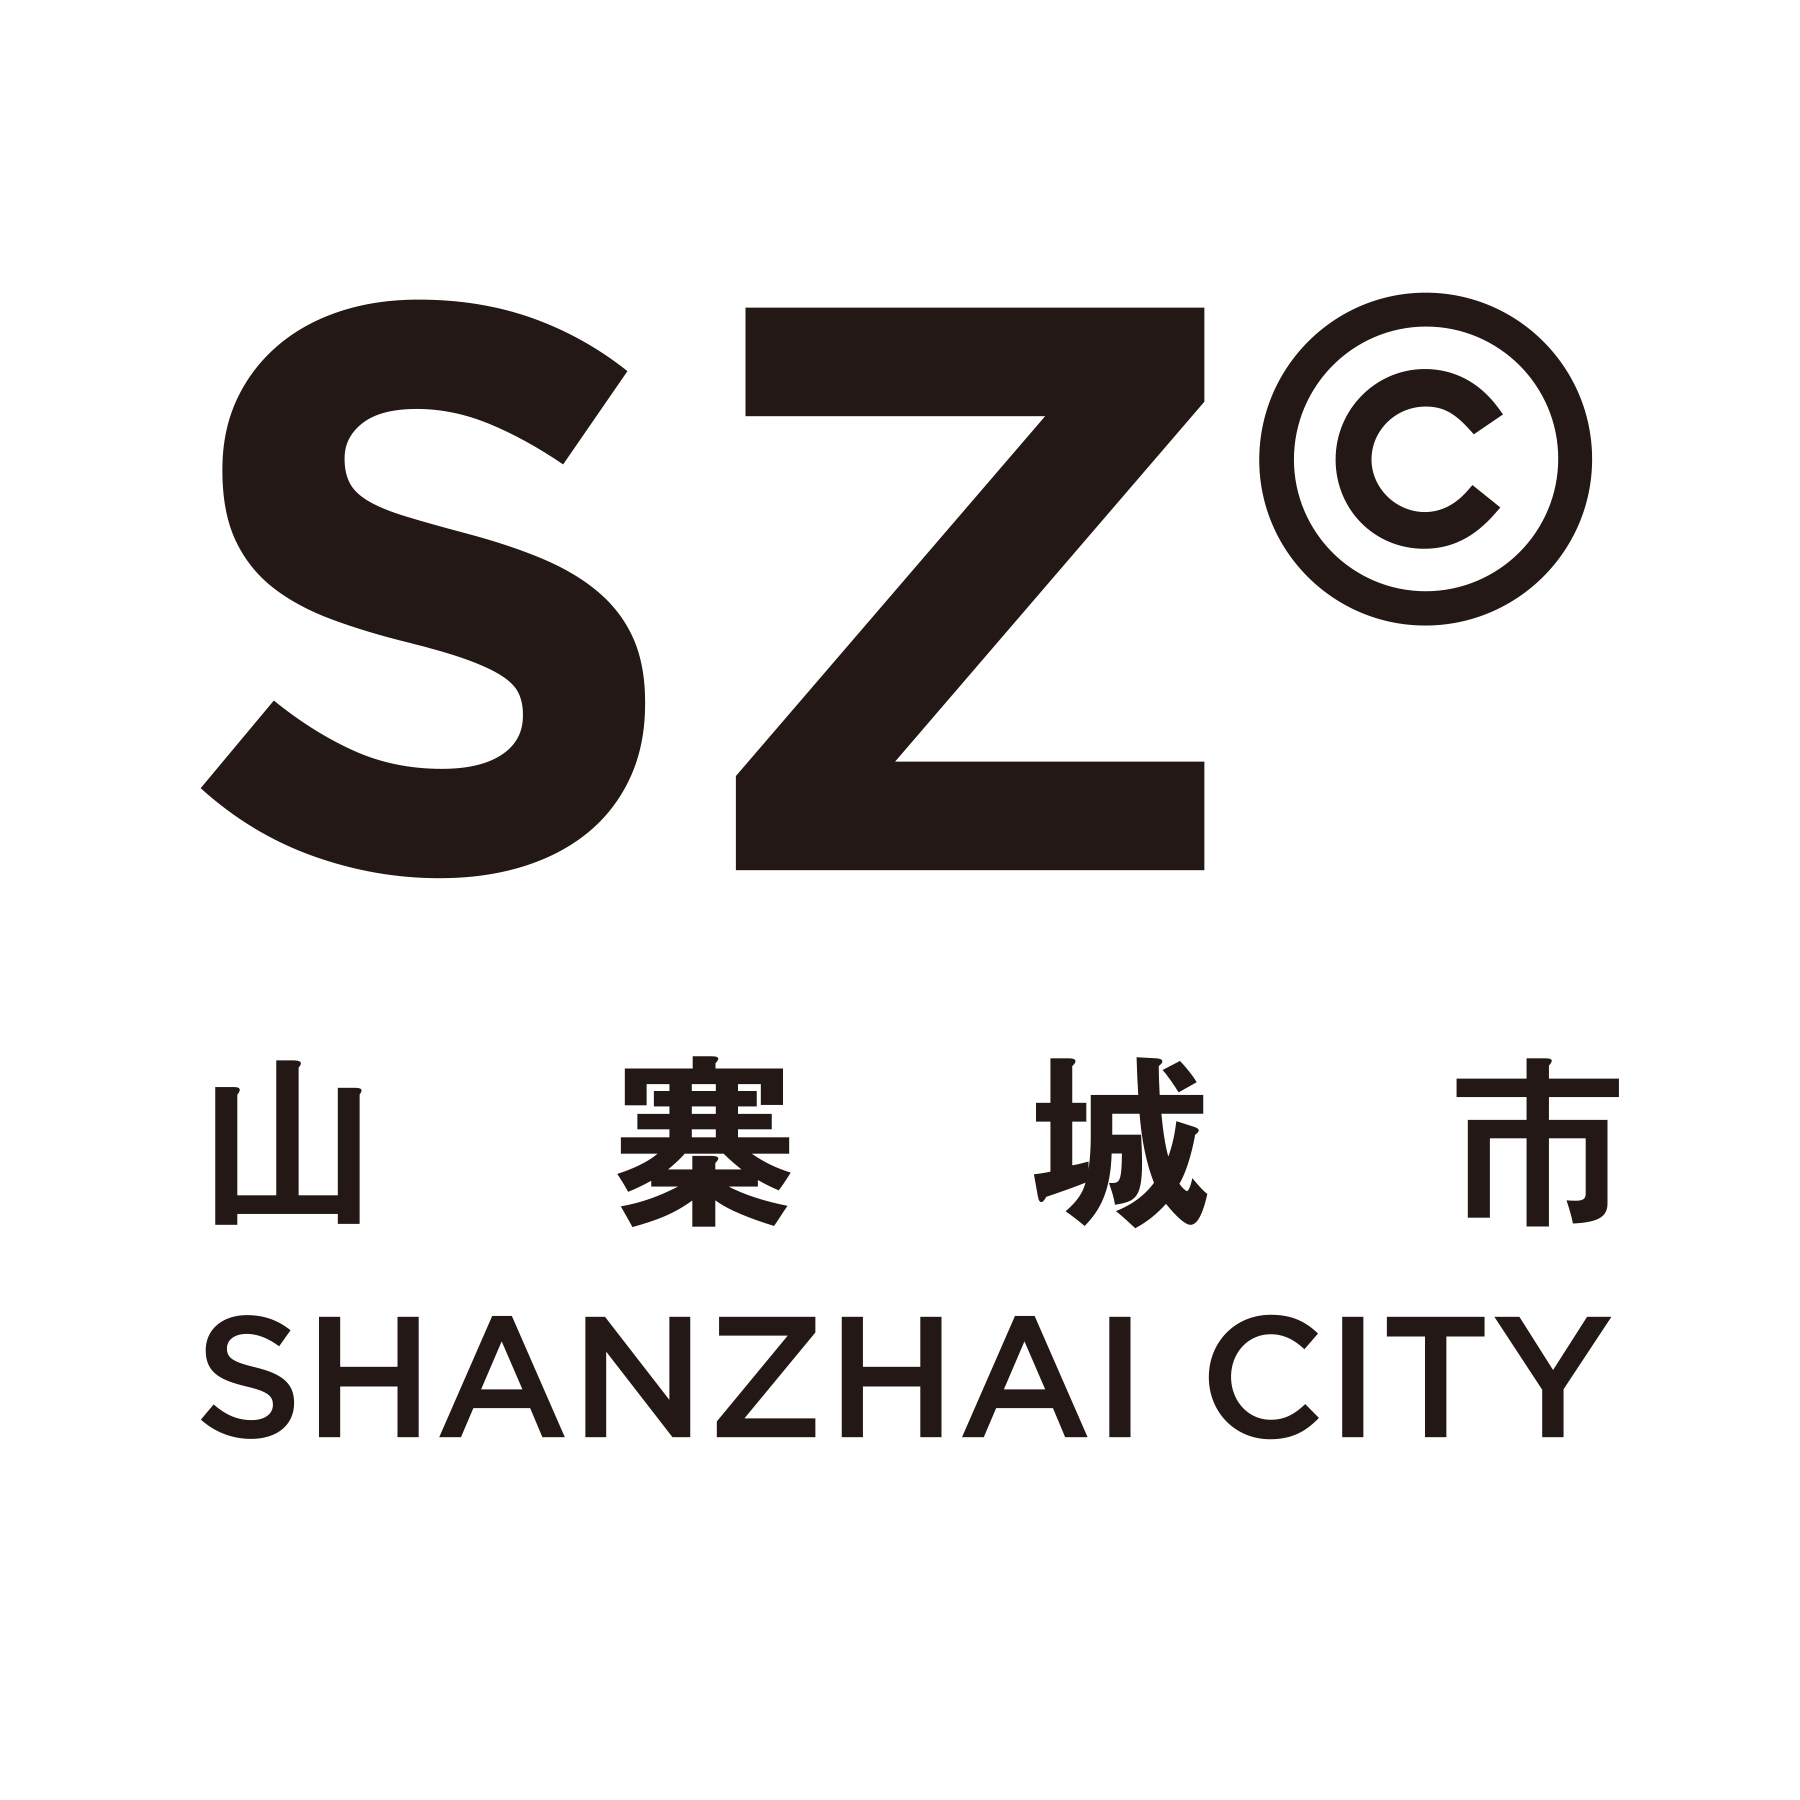 Shanzhai City logo